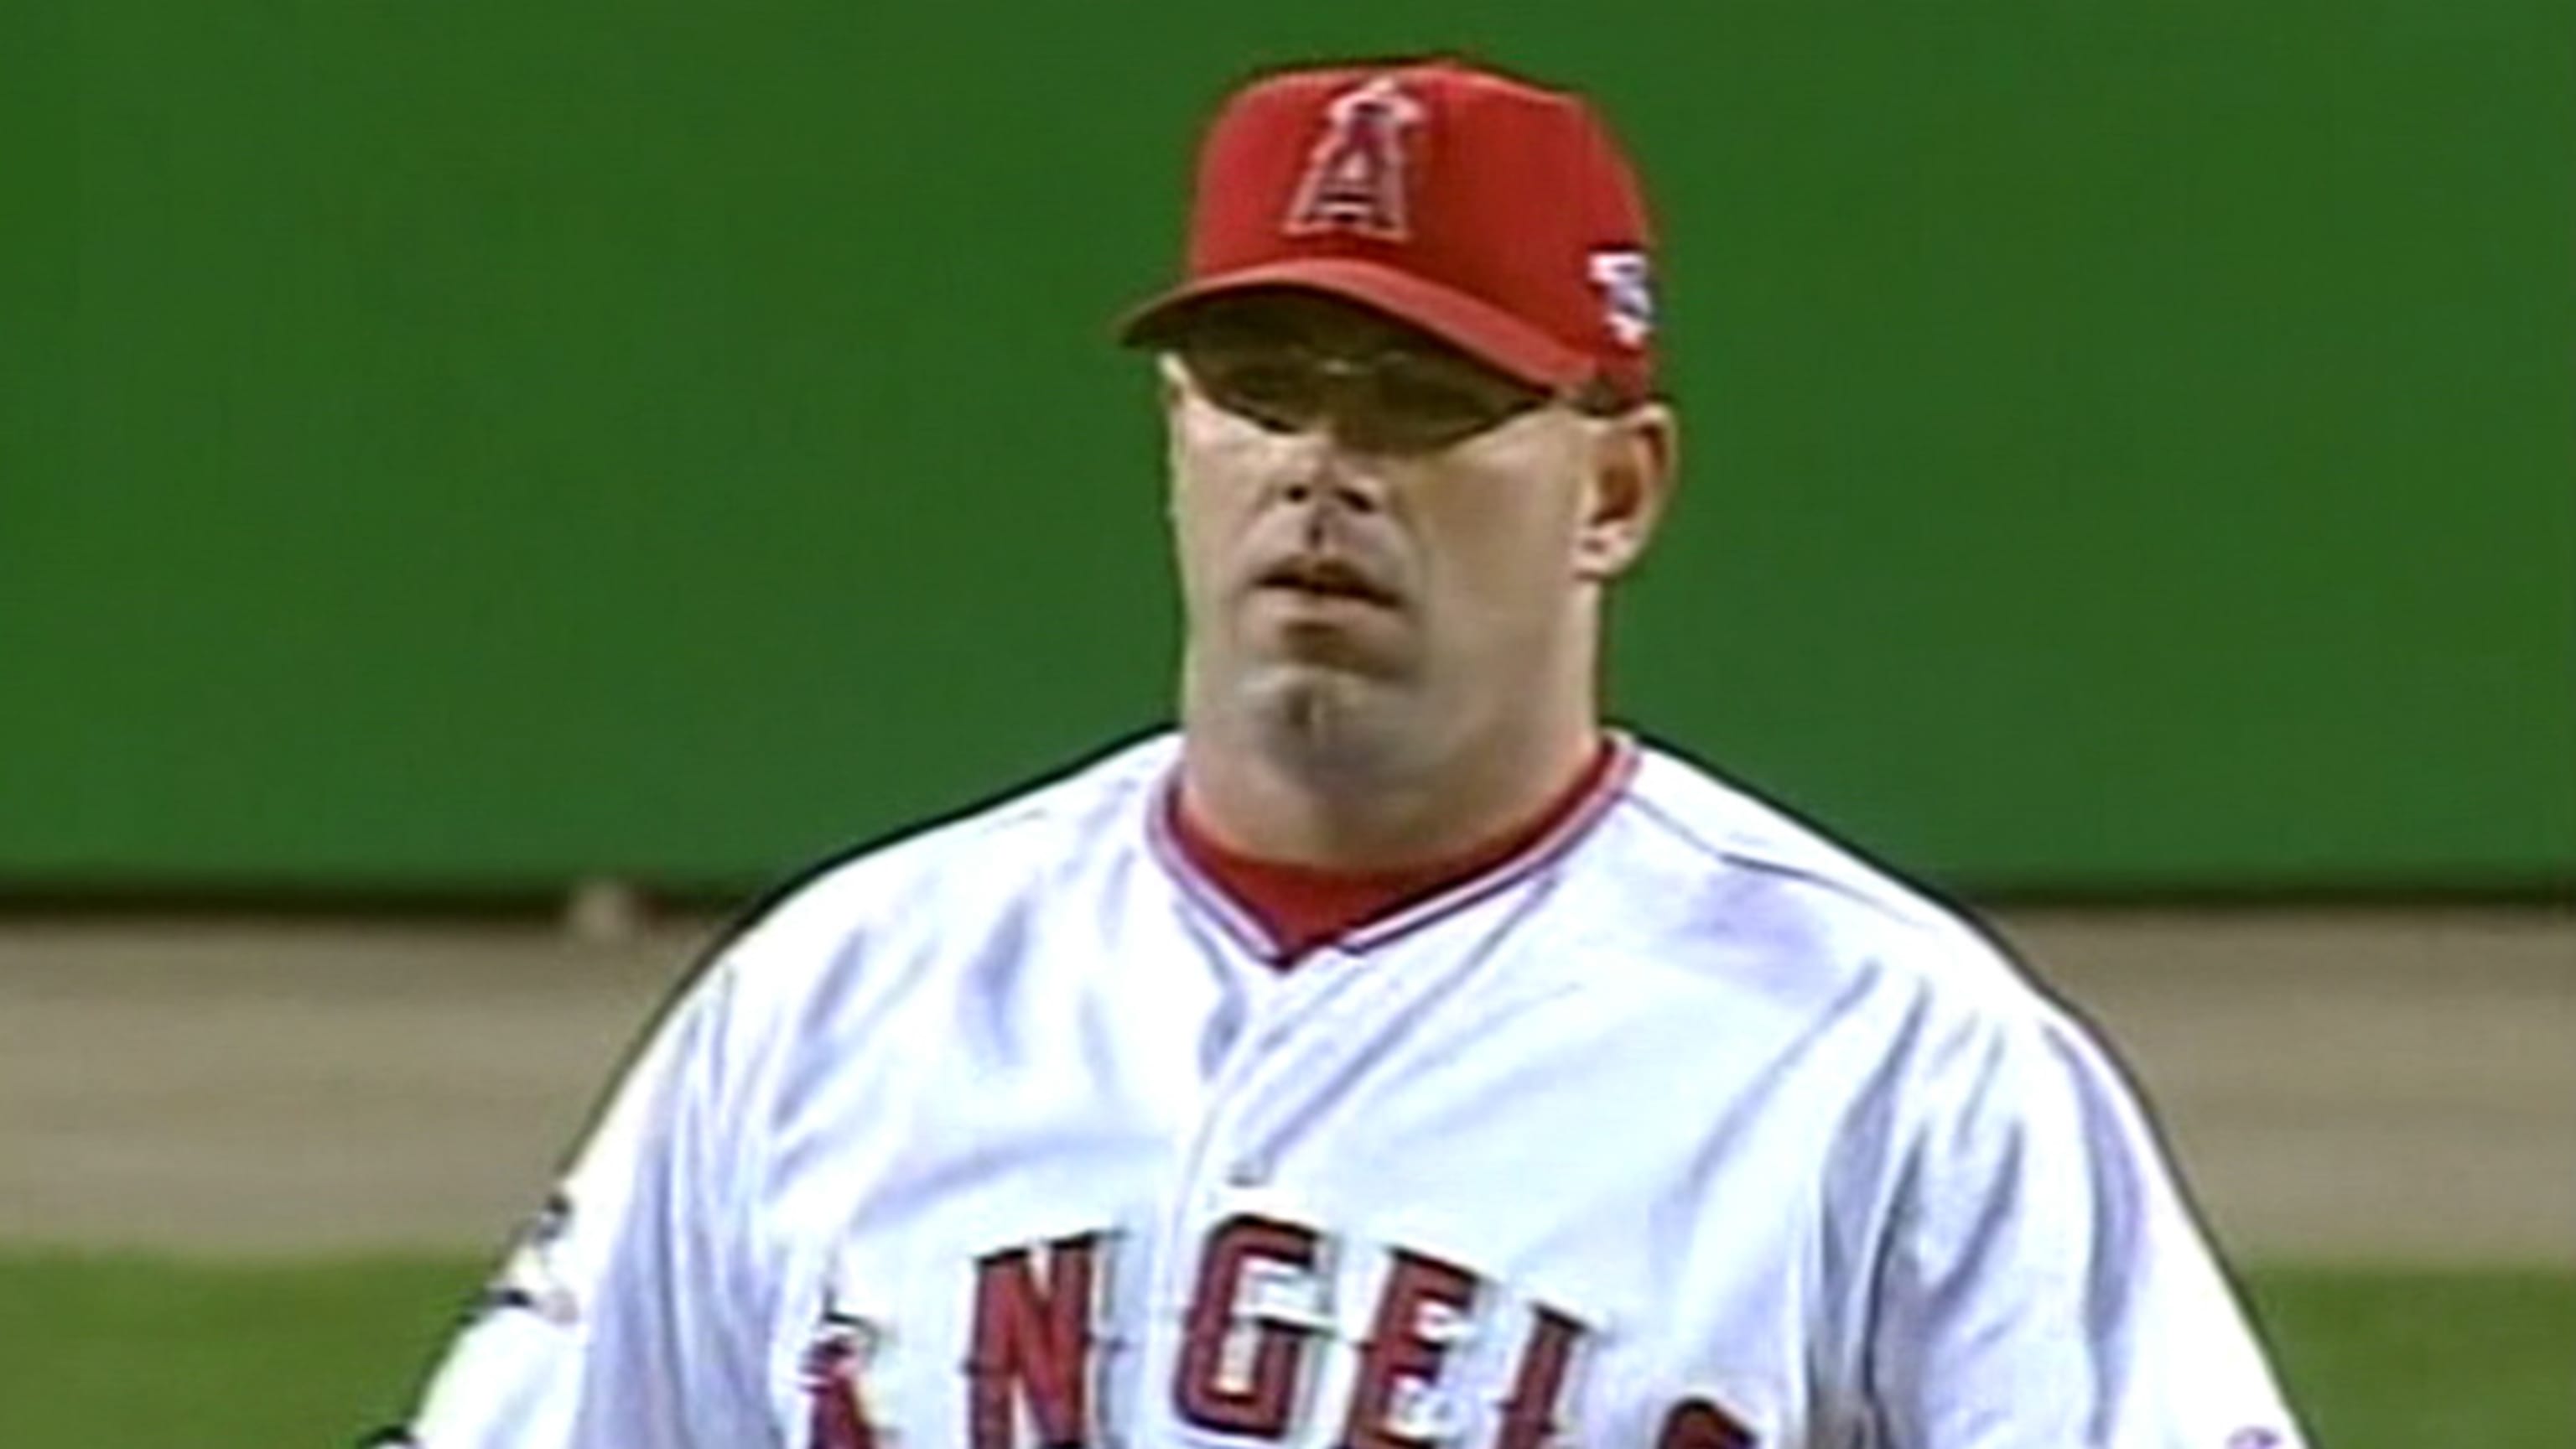 Brendan Donnelly Angels' 2002 World Series hero